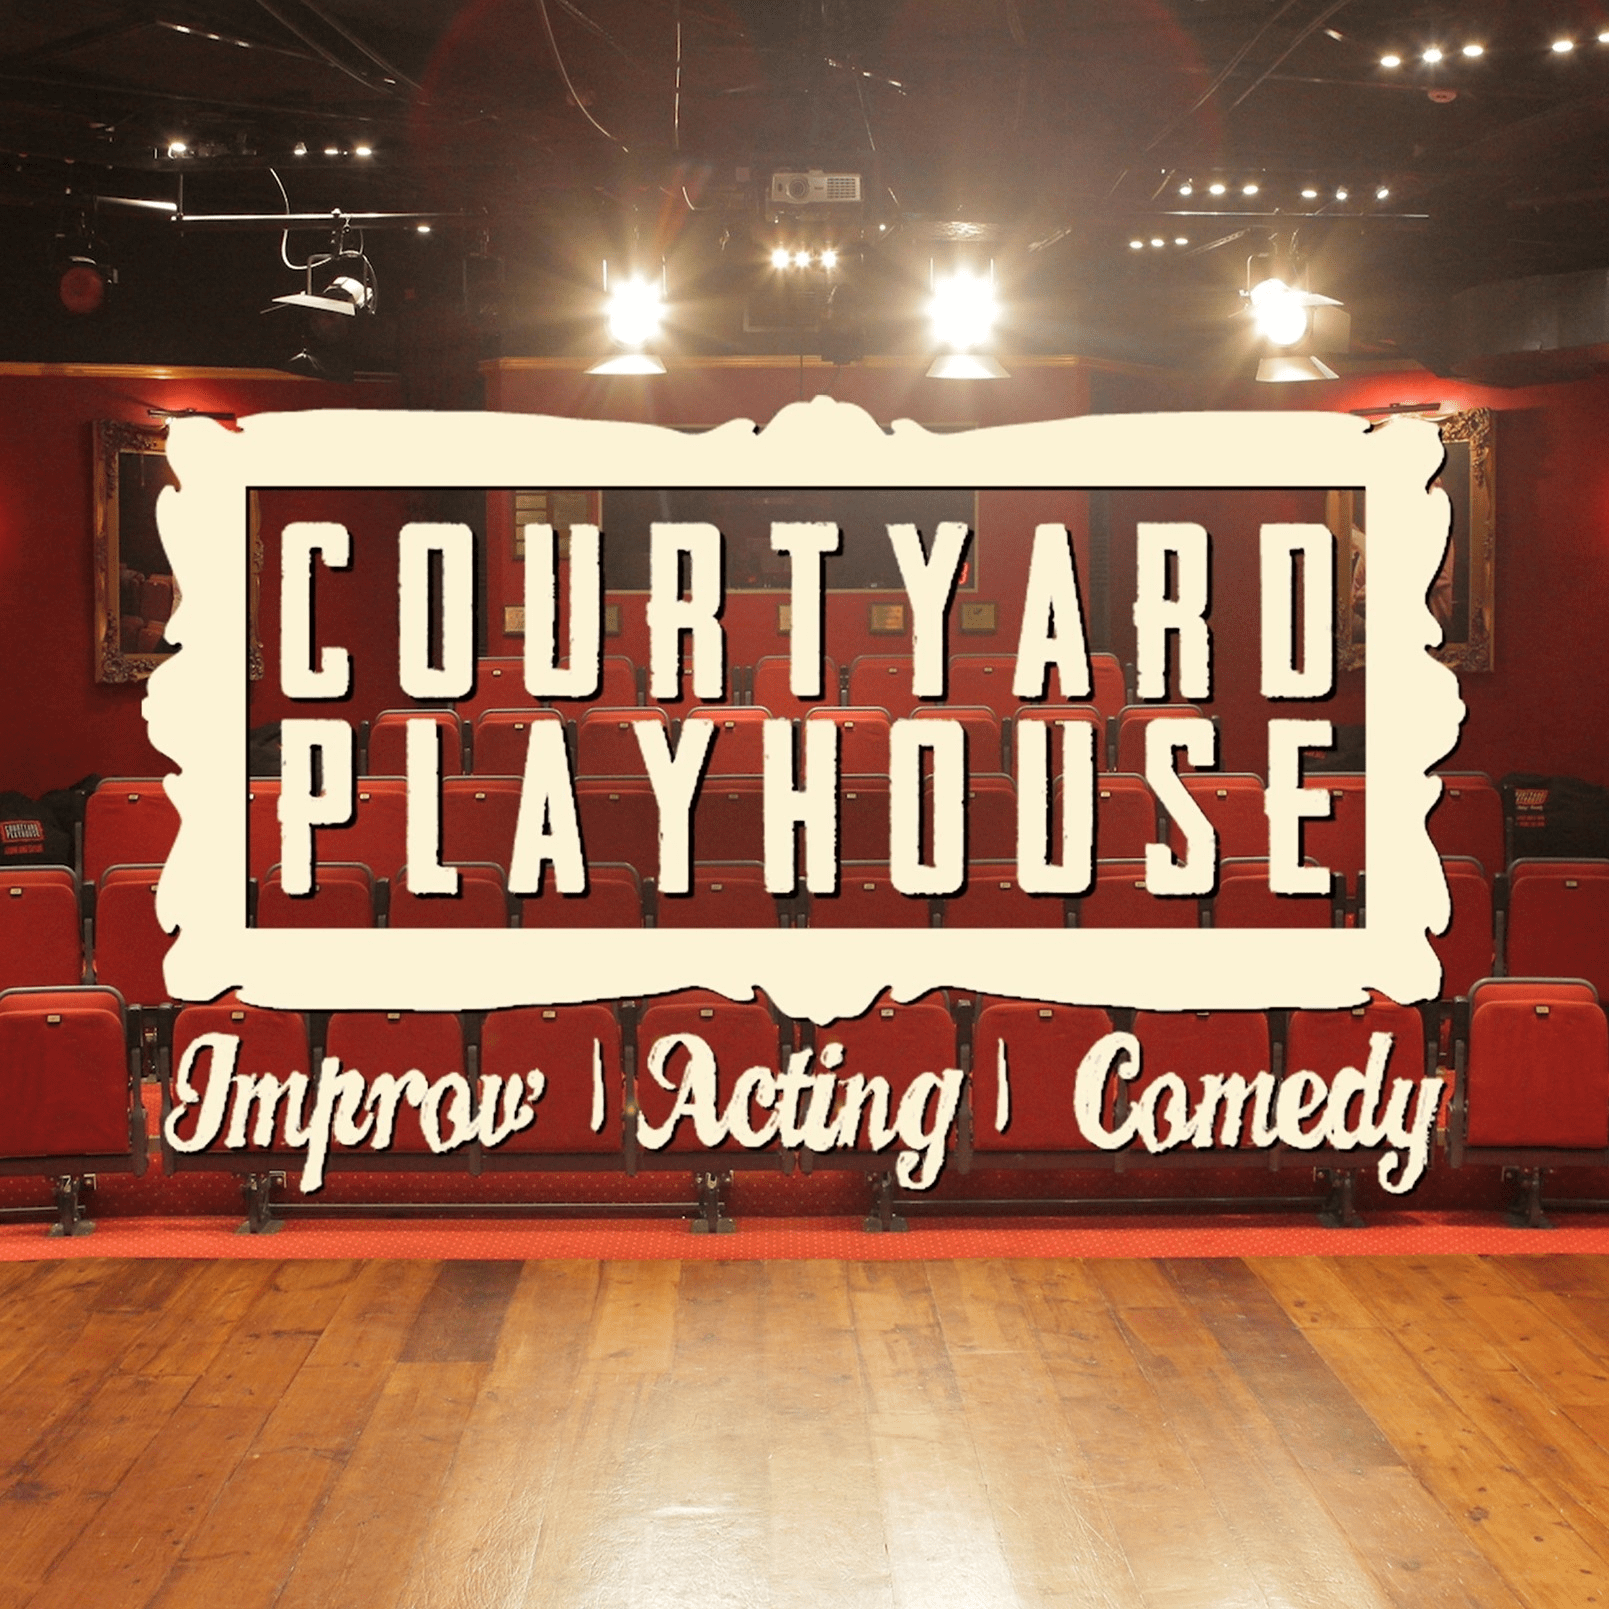 The Courtyard Playhouse - Coming Soon in UAE